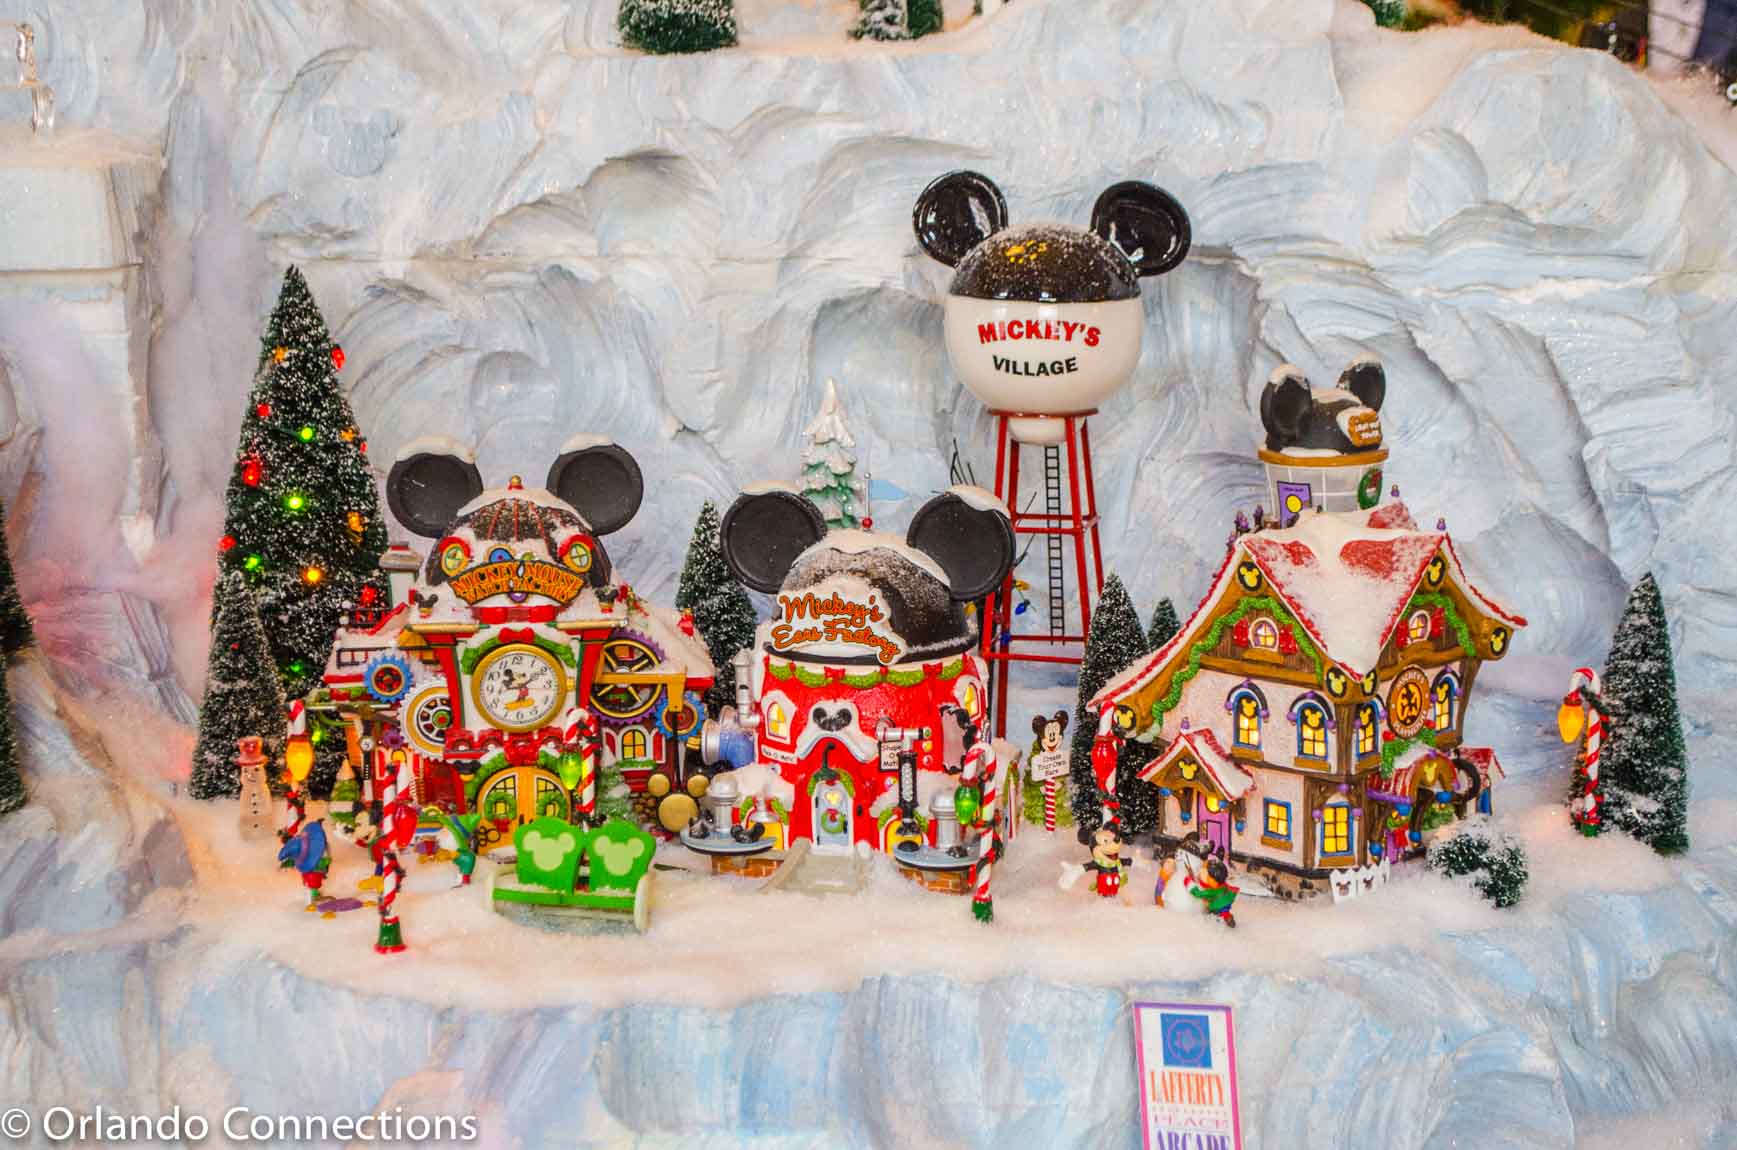 Christmas at Disney's Boardwalk Orlando Connections